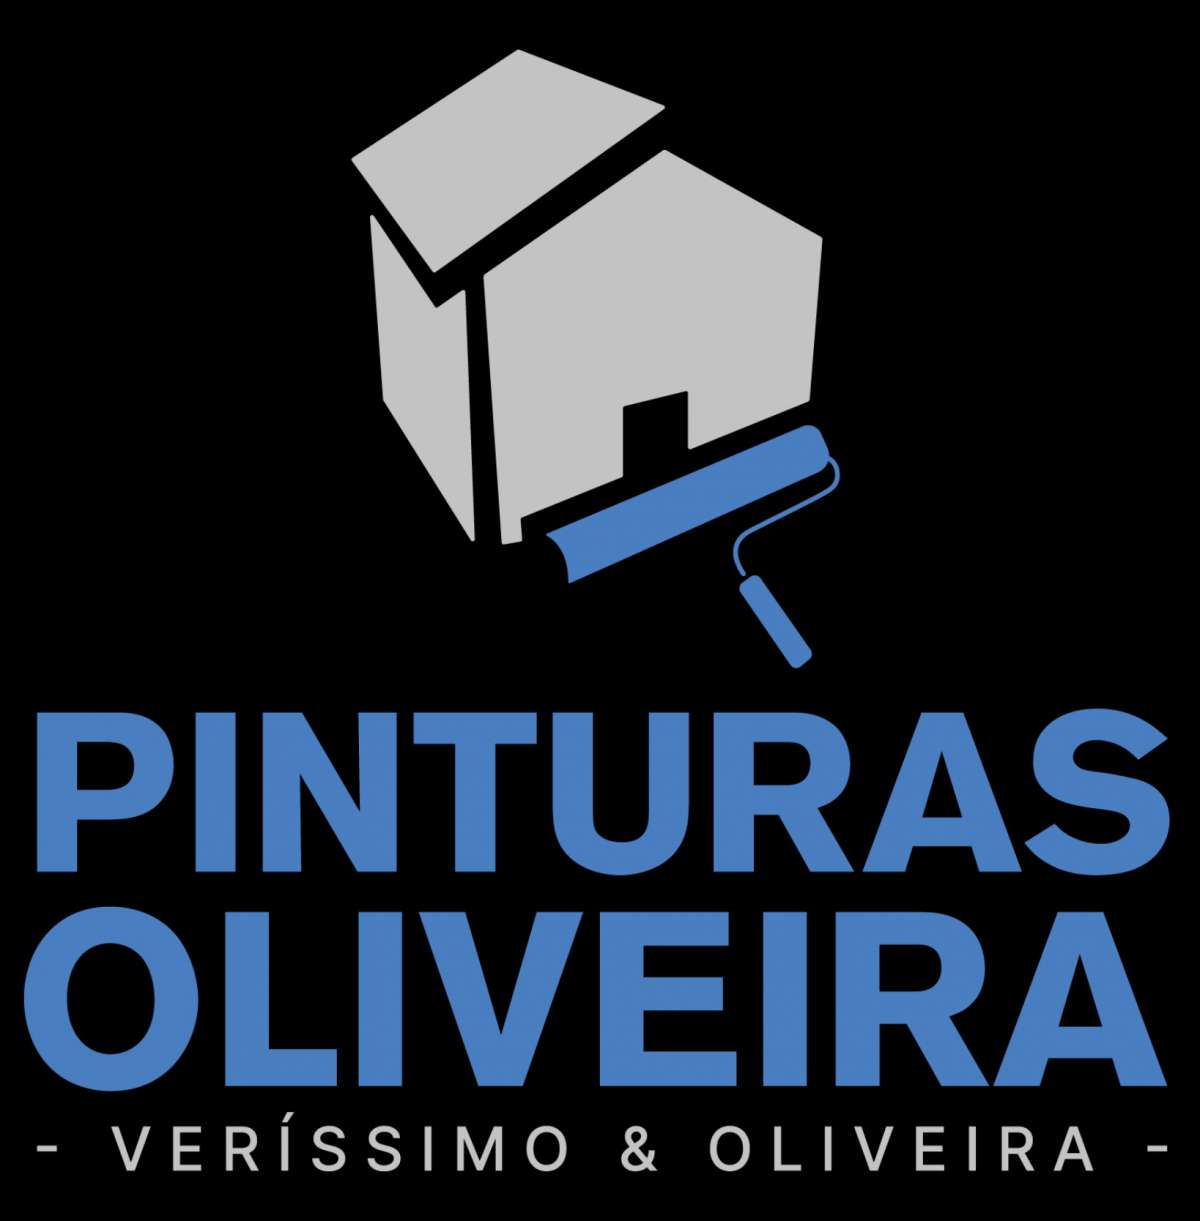 Pinturas Oliveira - Vila Nova de Famalicão - Pintura Exterior